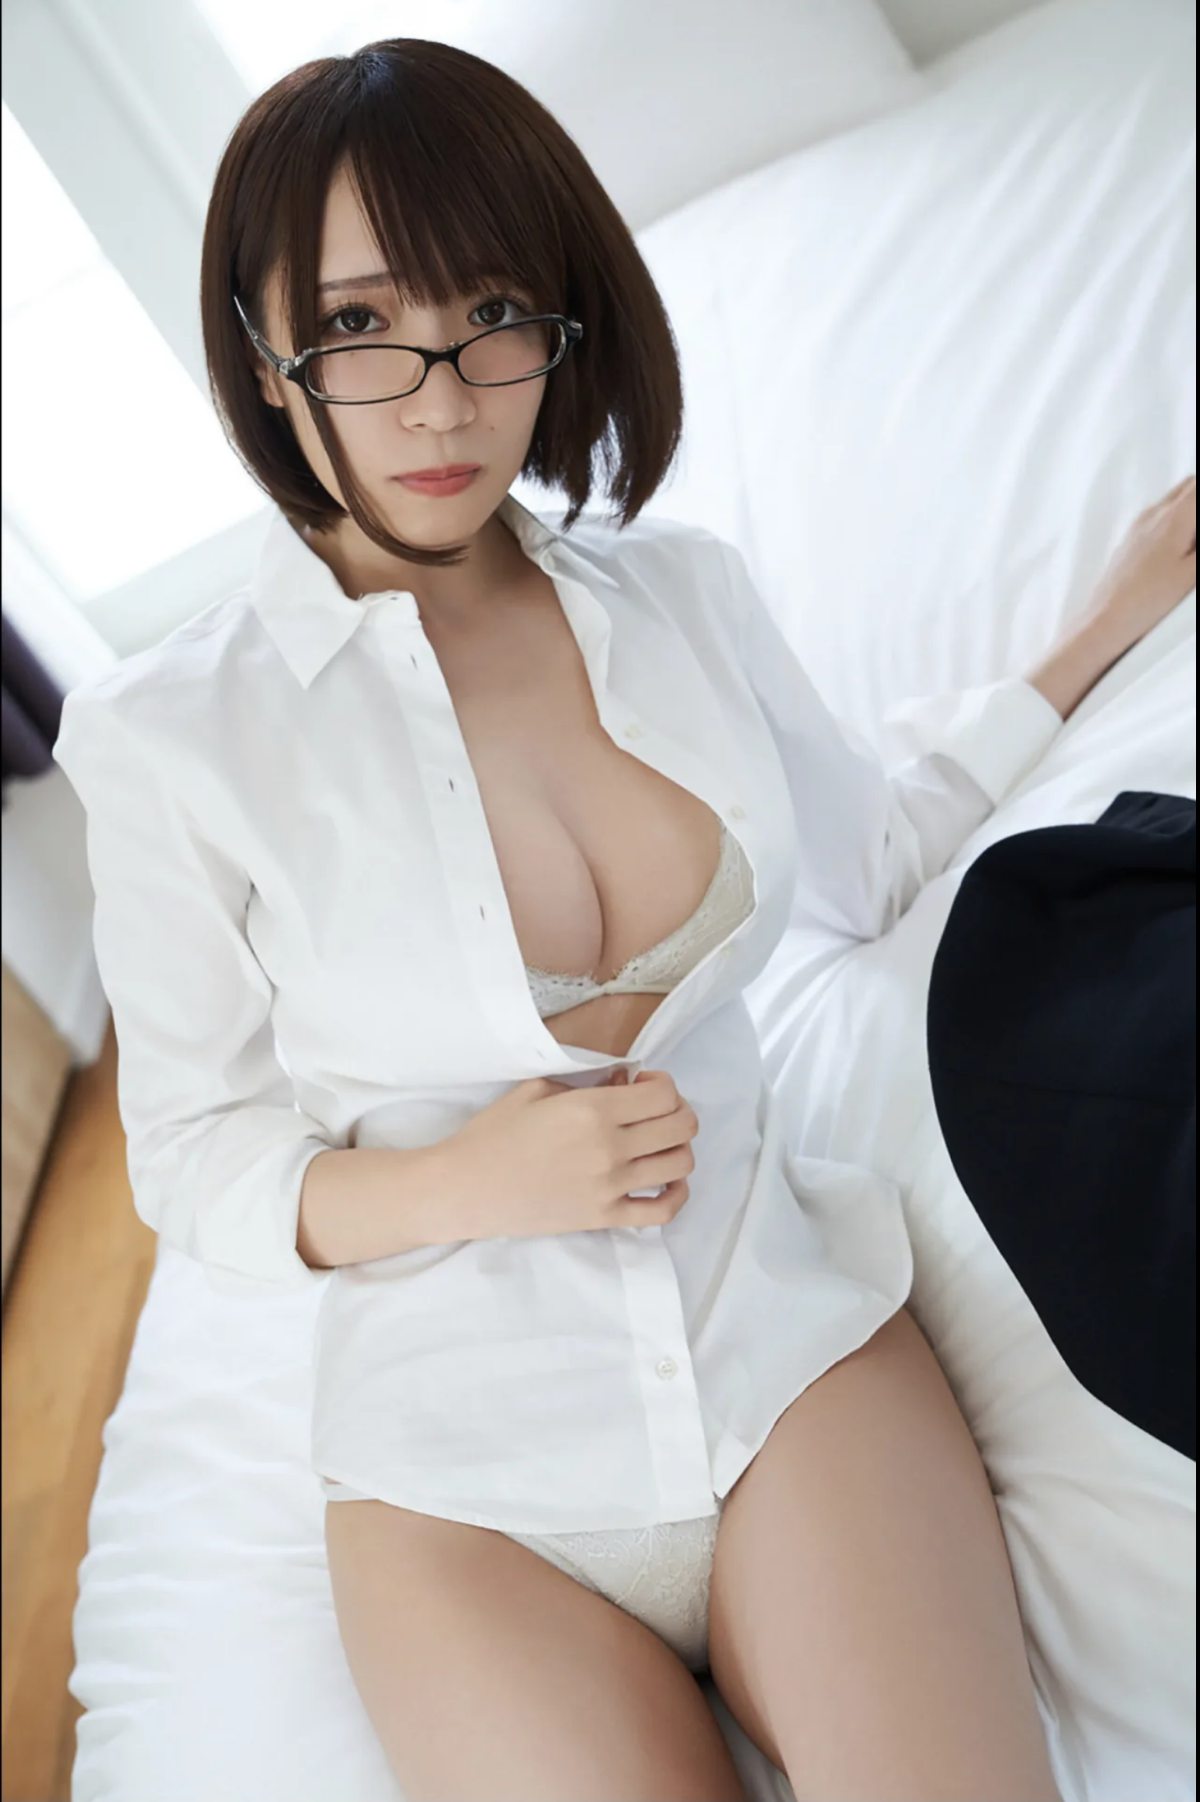 FRIDAY Digital Photobook Airi Shimizu 清水あいり Too erotic body Vol 3 エロすぎるカラダ Vol 3 2021 04 30 0017 6976569317.jpg